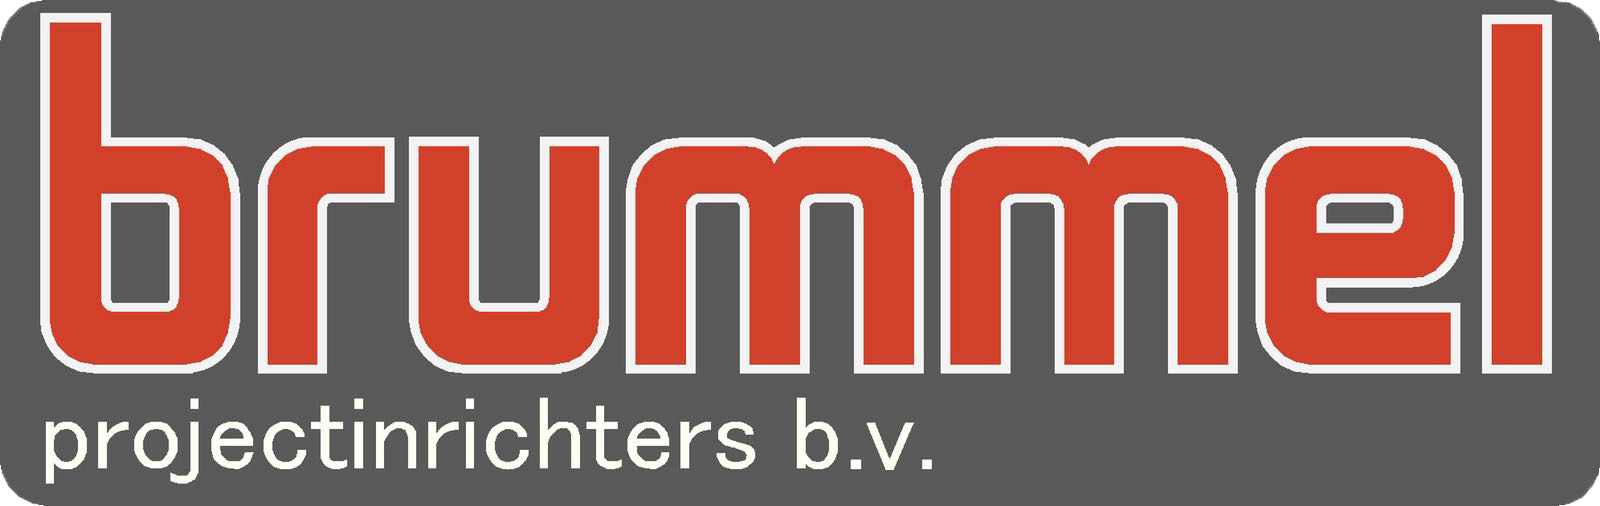 brummel-logo